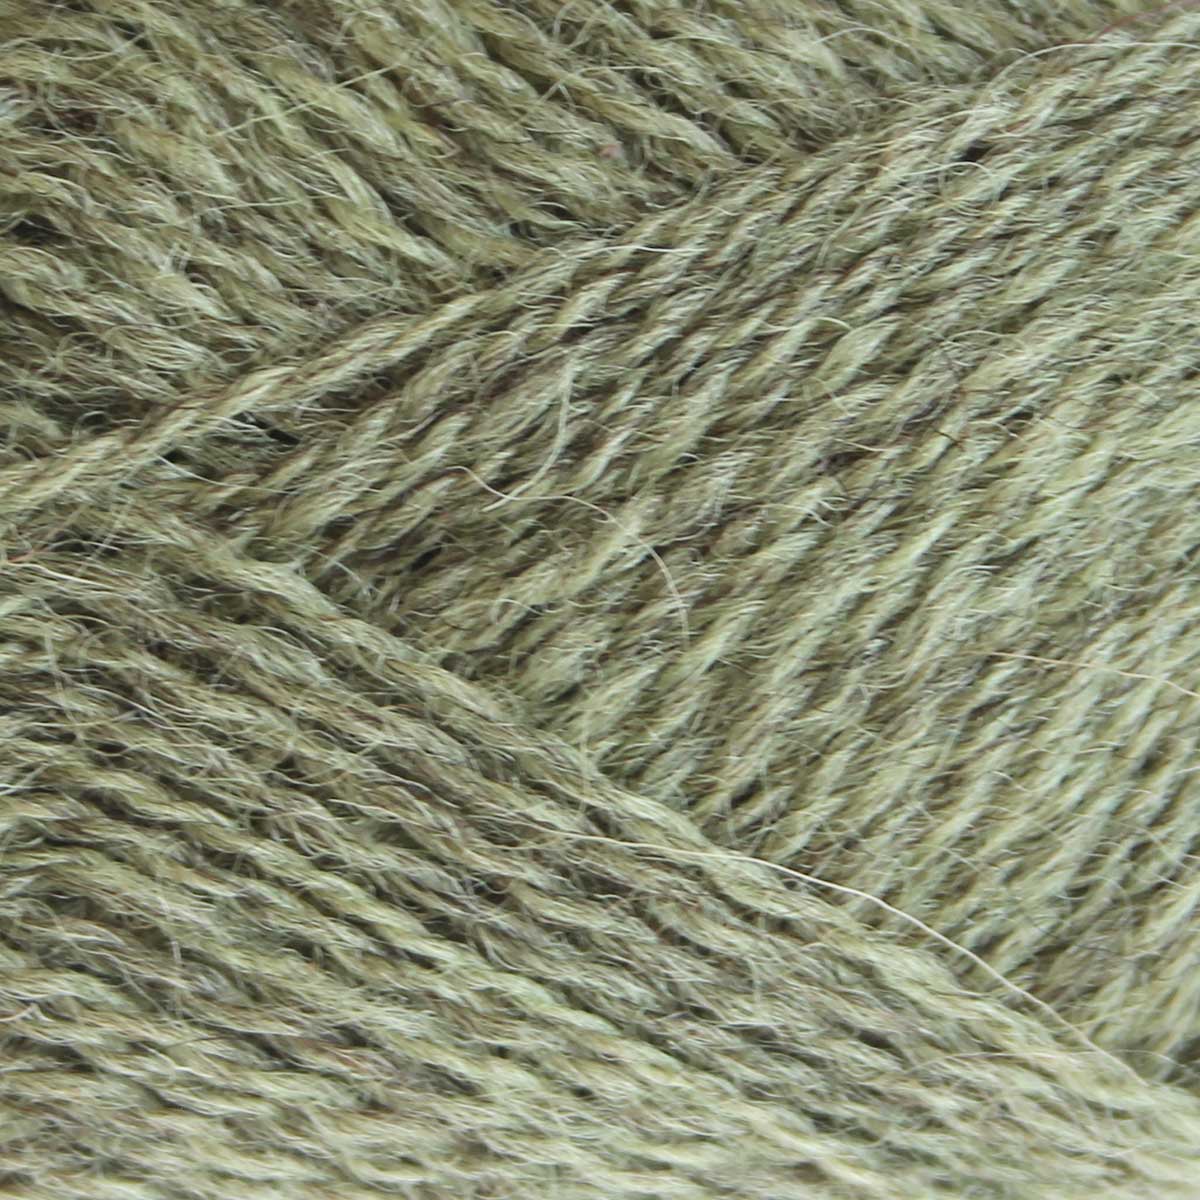 Pip Colourwork 4ply: 100% British Wool